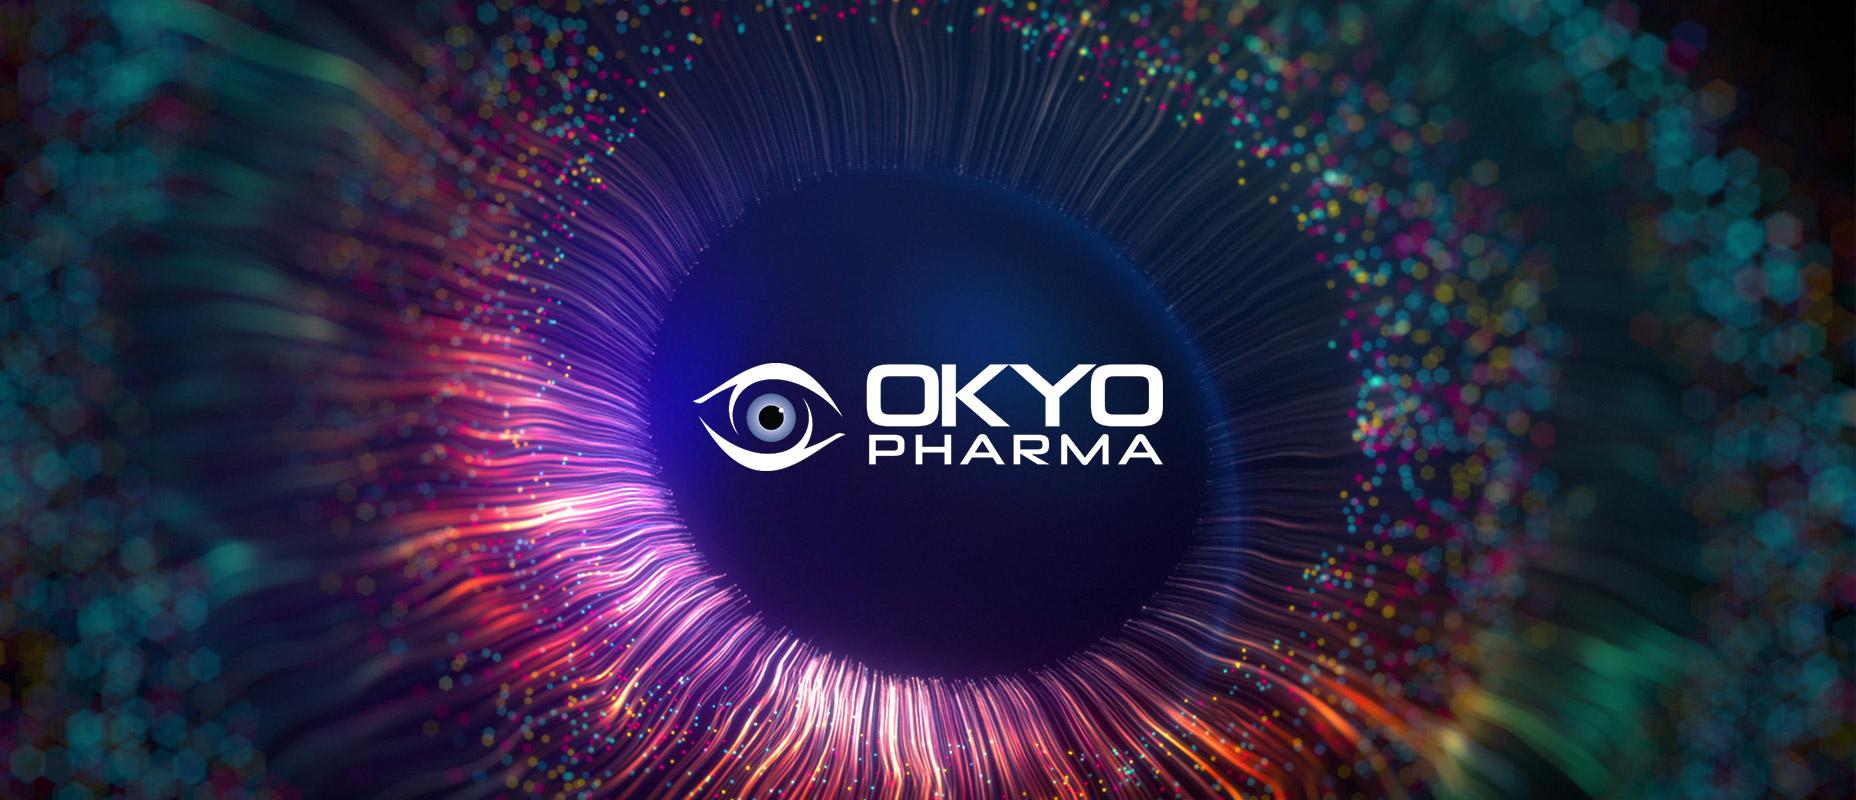 Brief information on OKYO Pharma